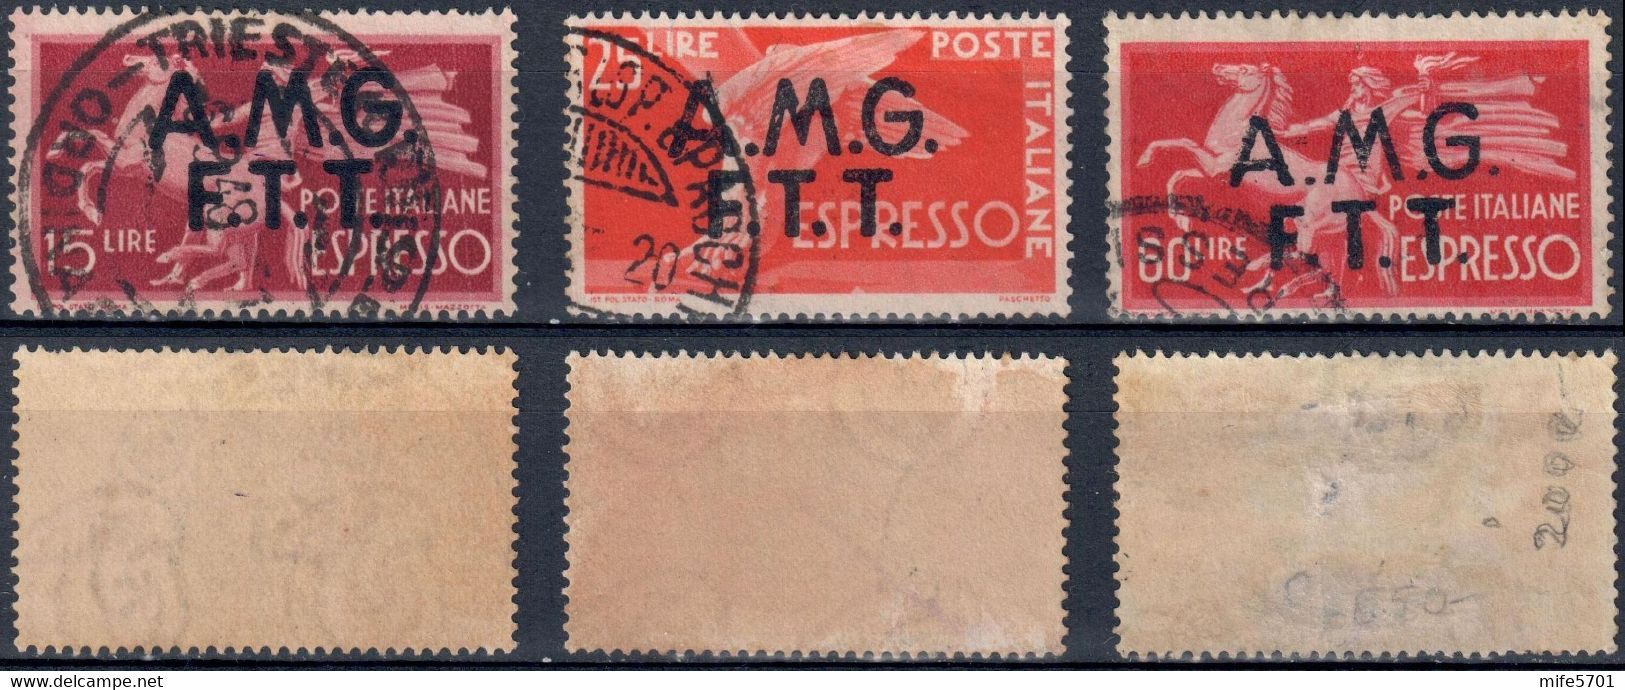 AMG-FTT 1947/48 - ESPRESSI SERIE DEMOCRATICA L. 15 / 25 / 60 SOPRASTAMPA SU DUE RIGHE - USATI - USED ⦿ - SASSONE 1/2/4 - Exprespost